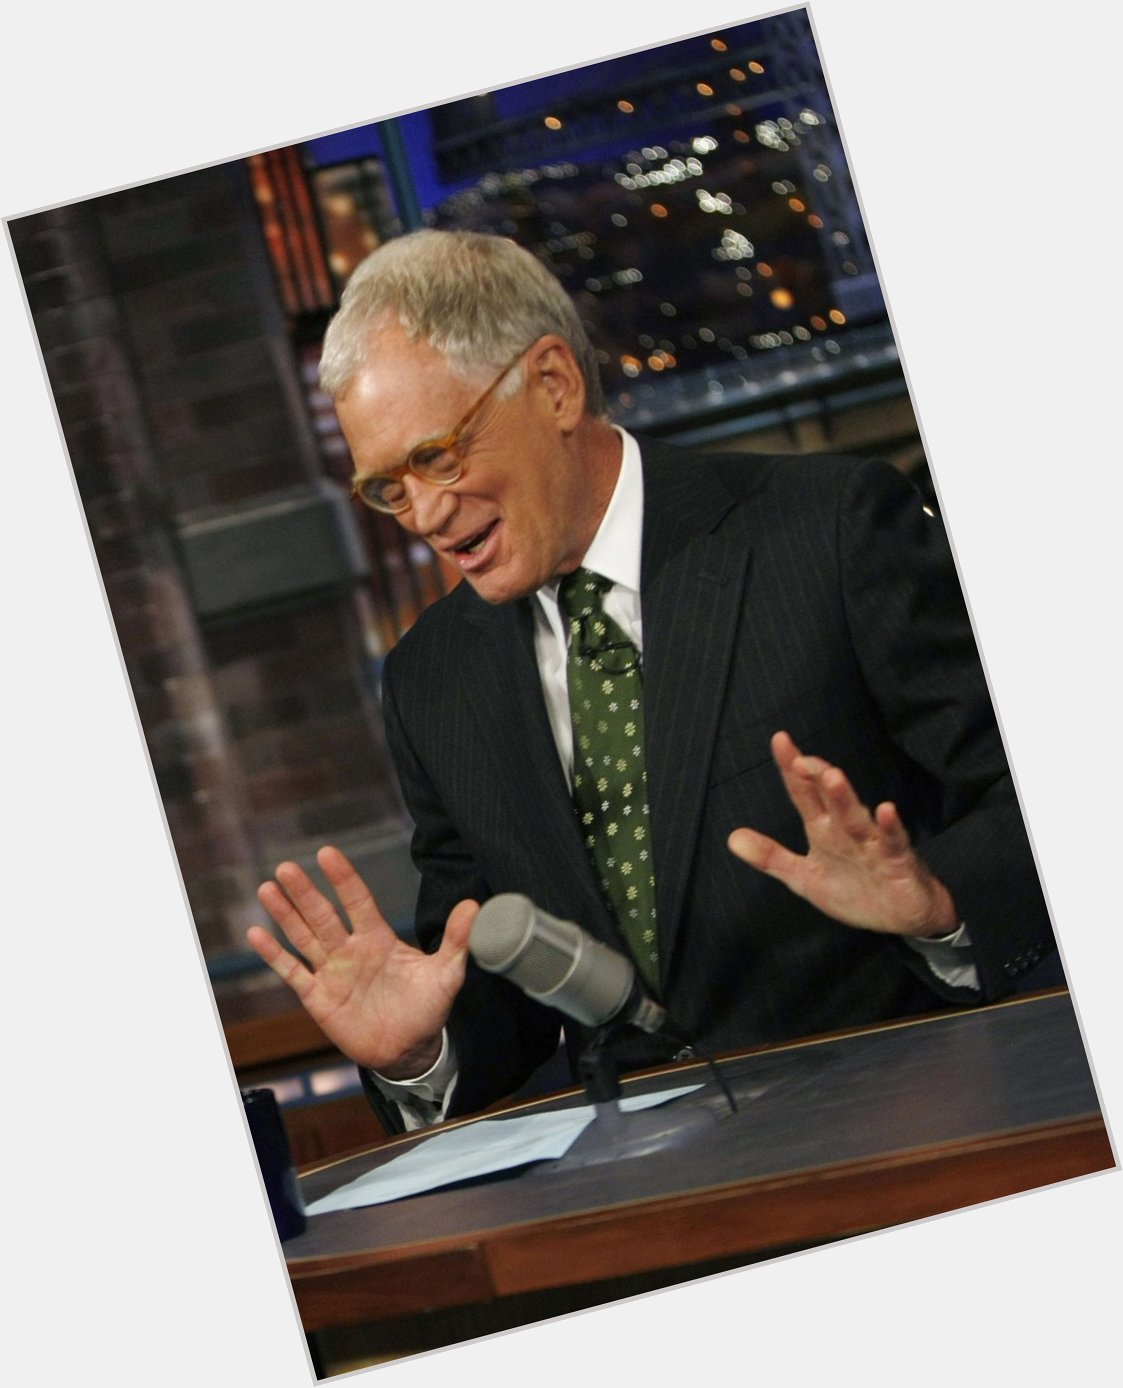 Wishing the legendary David Letterman a happy 76th birthday (Reuters)! 